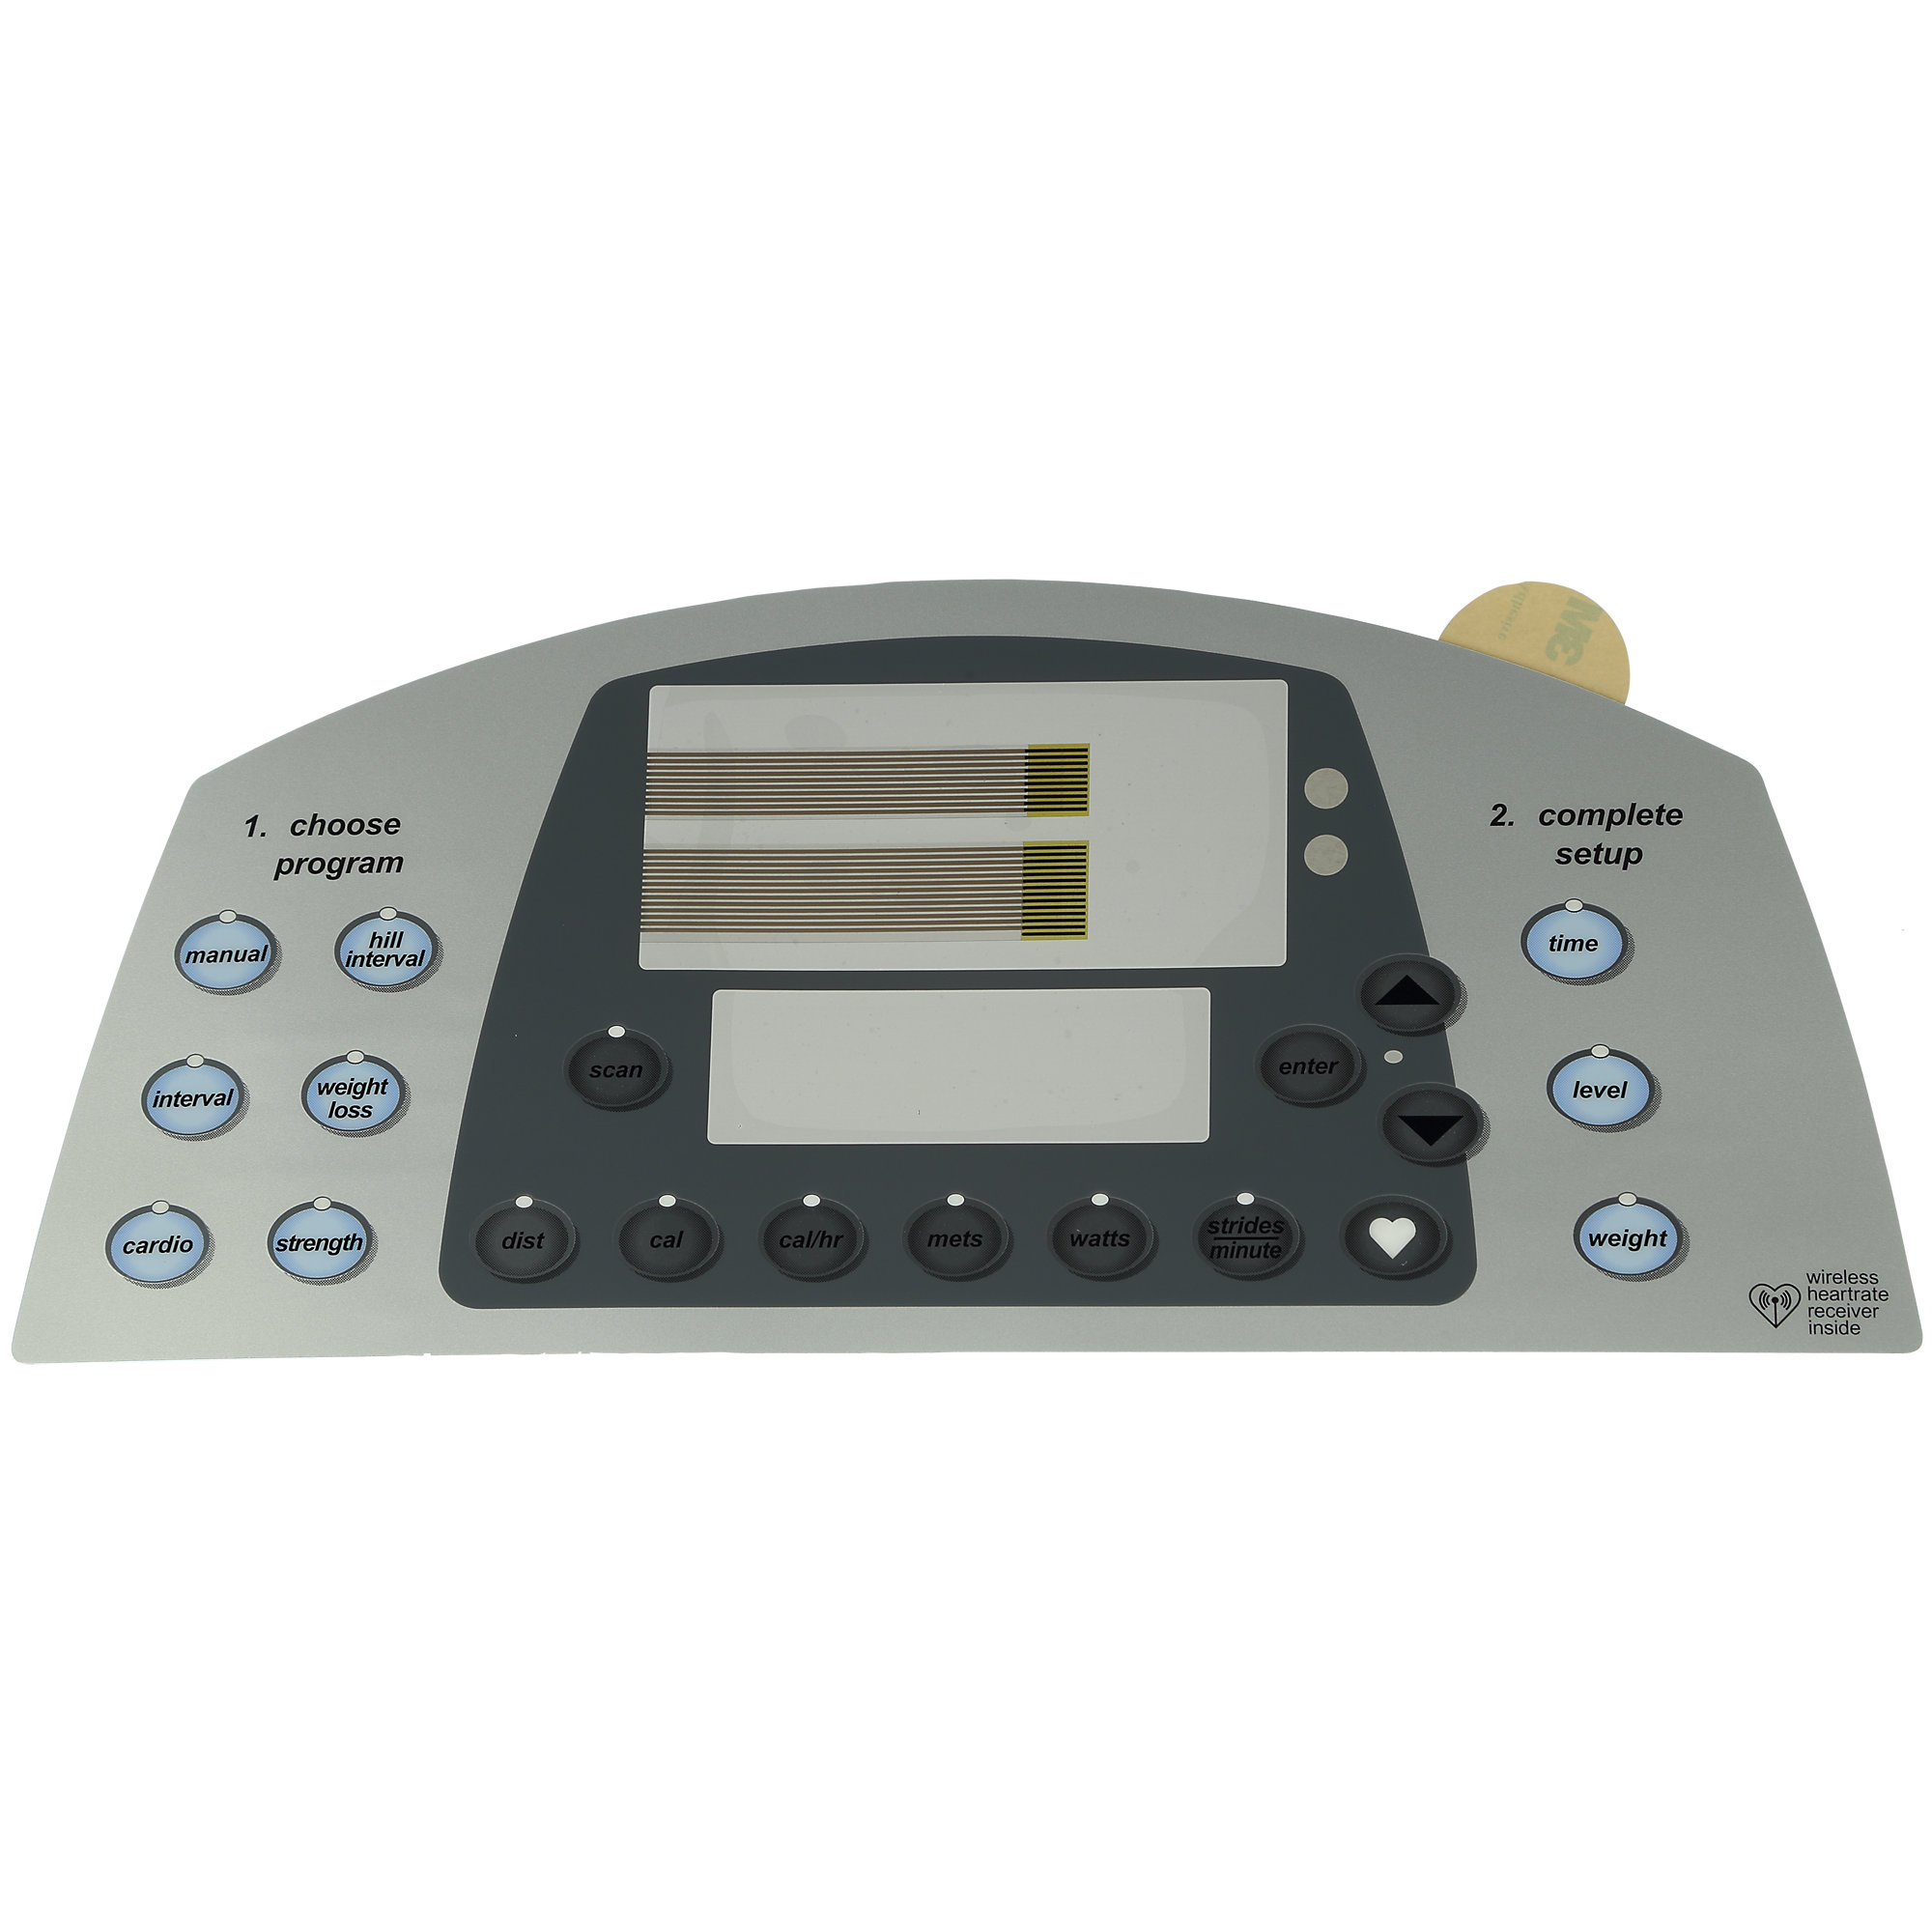 Top Overlay Keypad for Cybex Arc Trainer 610A, 630A, 620A, 629A